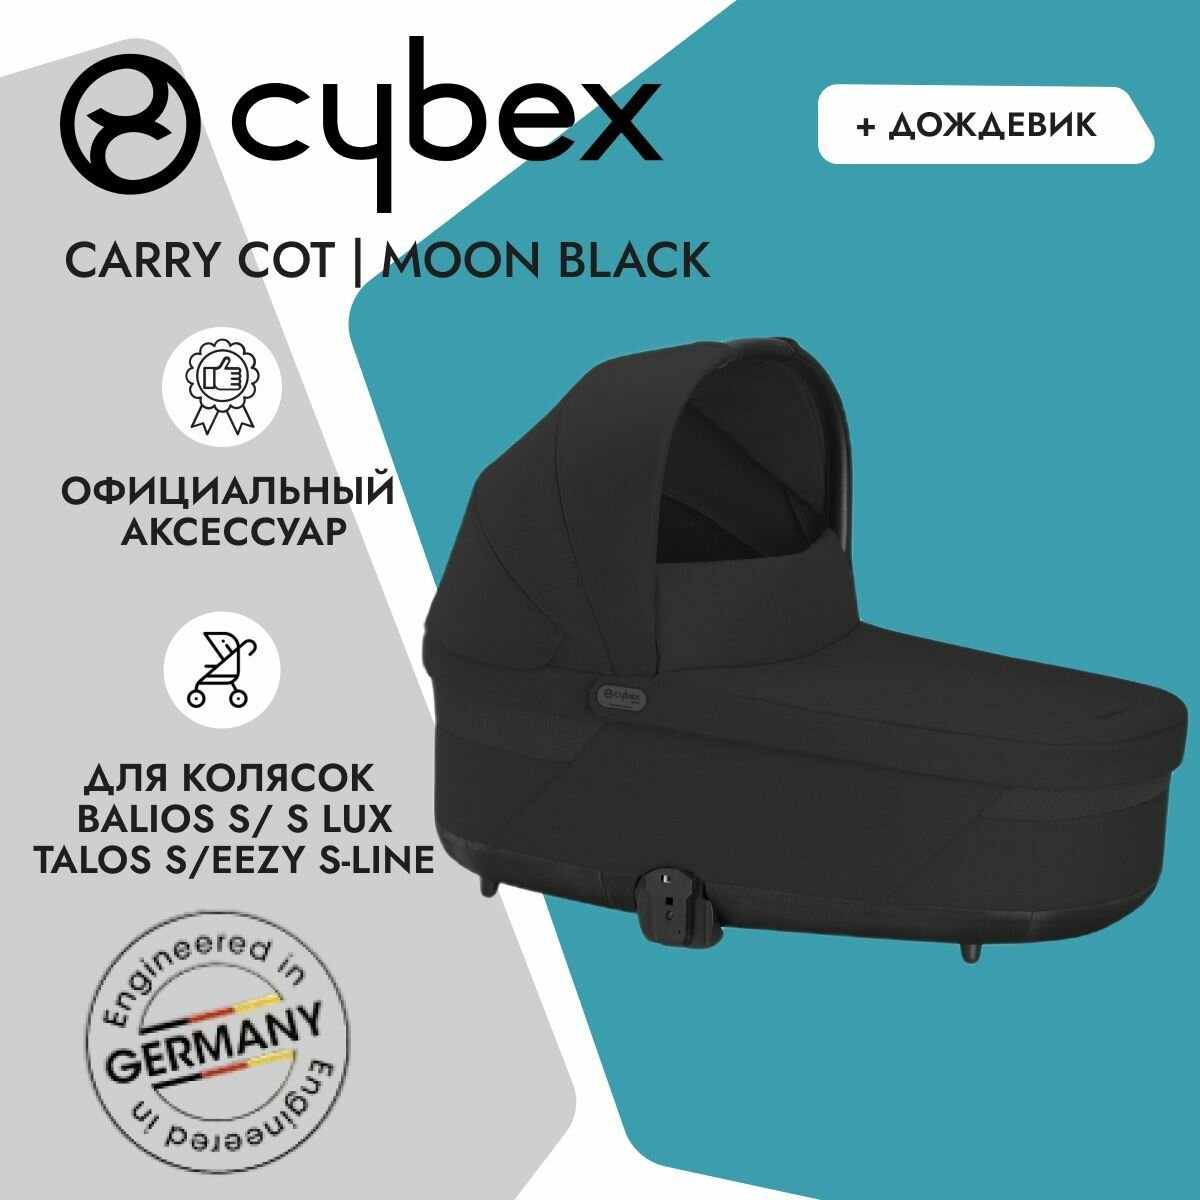 Cybex Спальный блок Cybex Cot S LUX для колясок серии S - Balios S/Balios S Lux/Talos S/Eezy S-Line цвет Moon Black с дождевиком